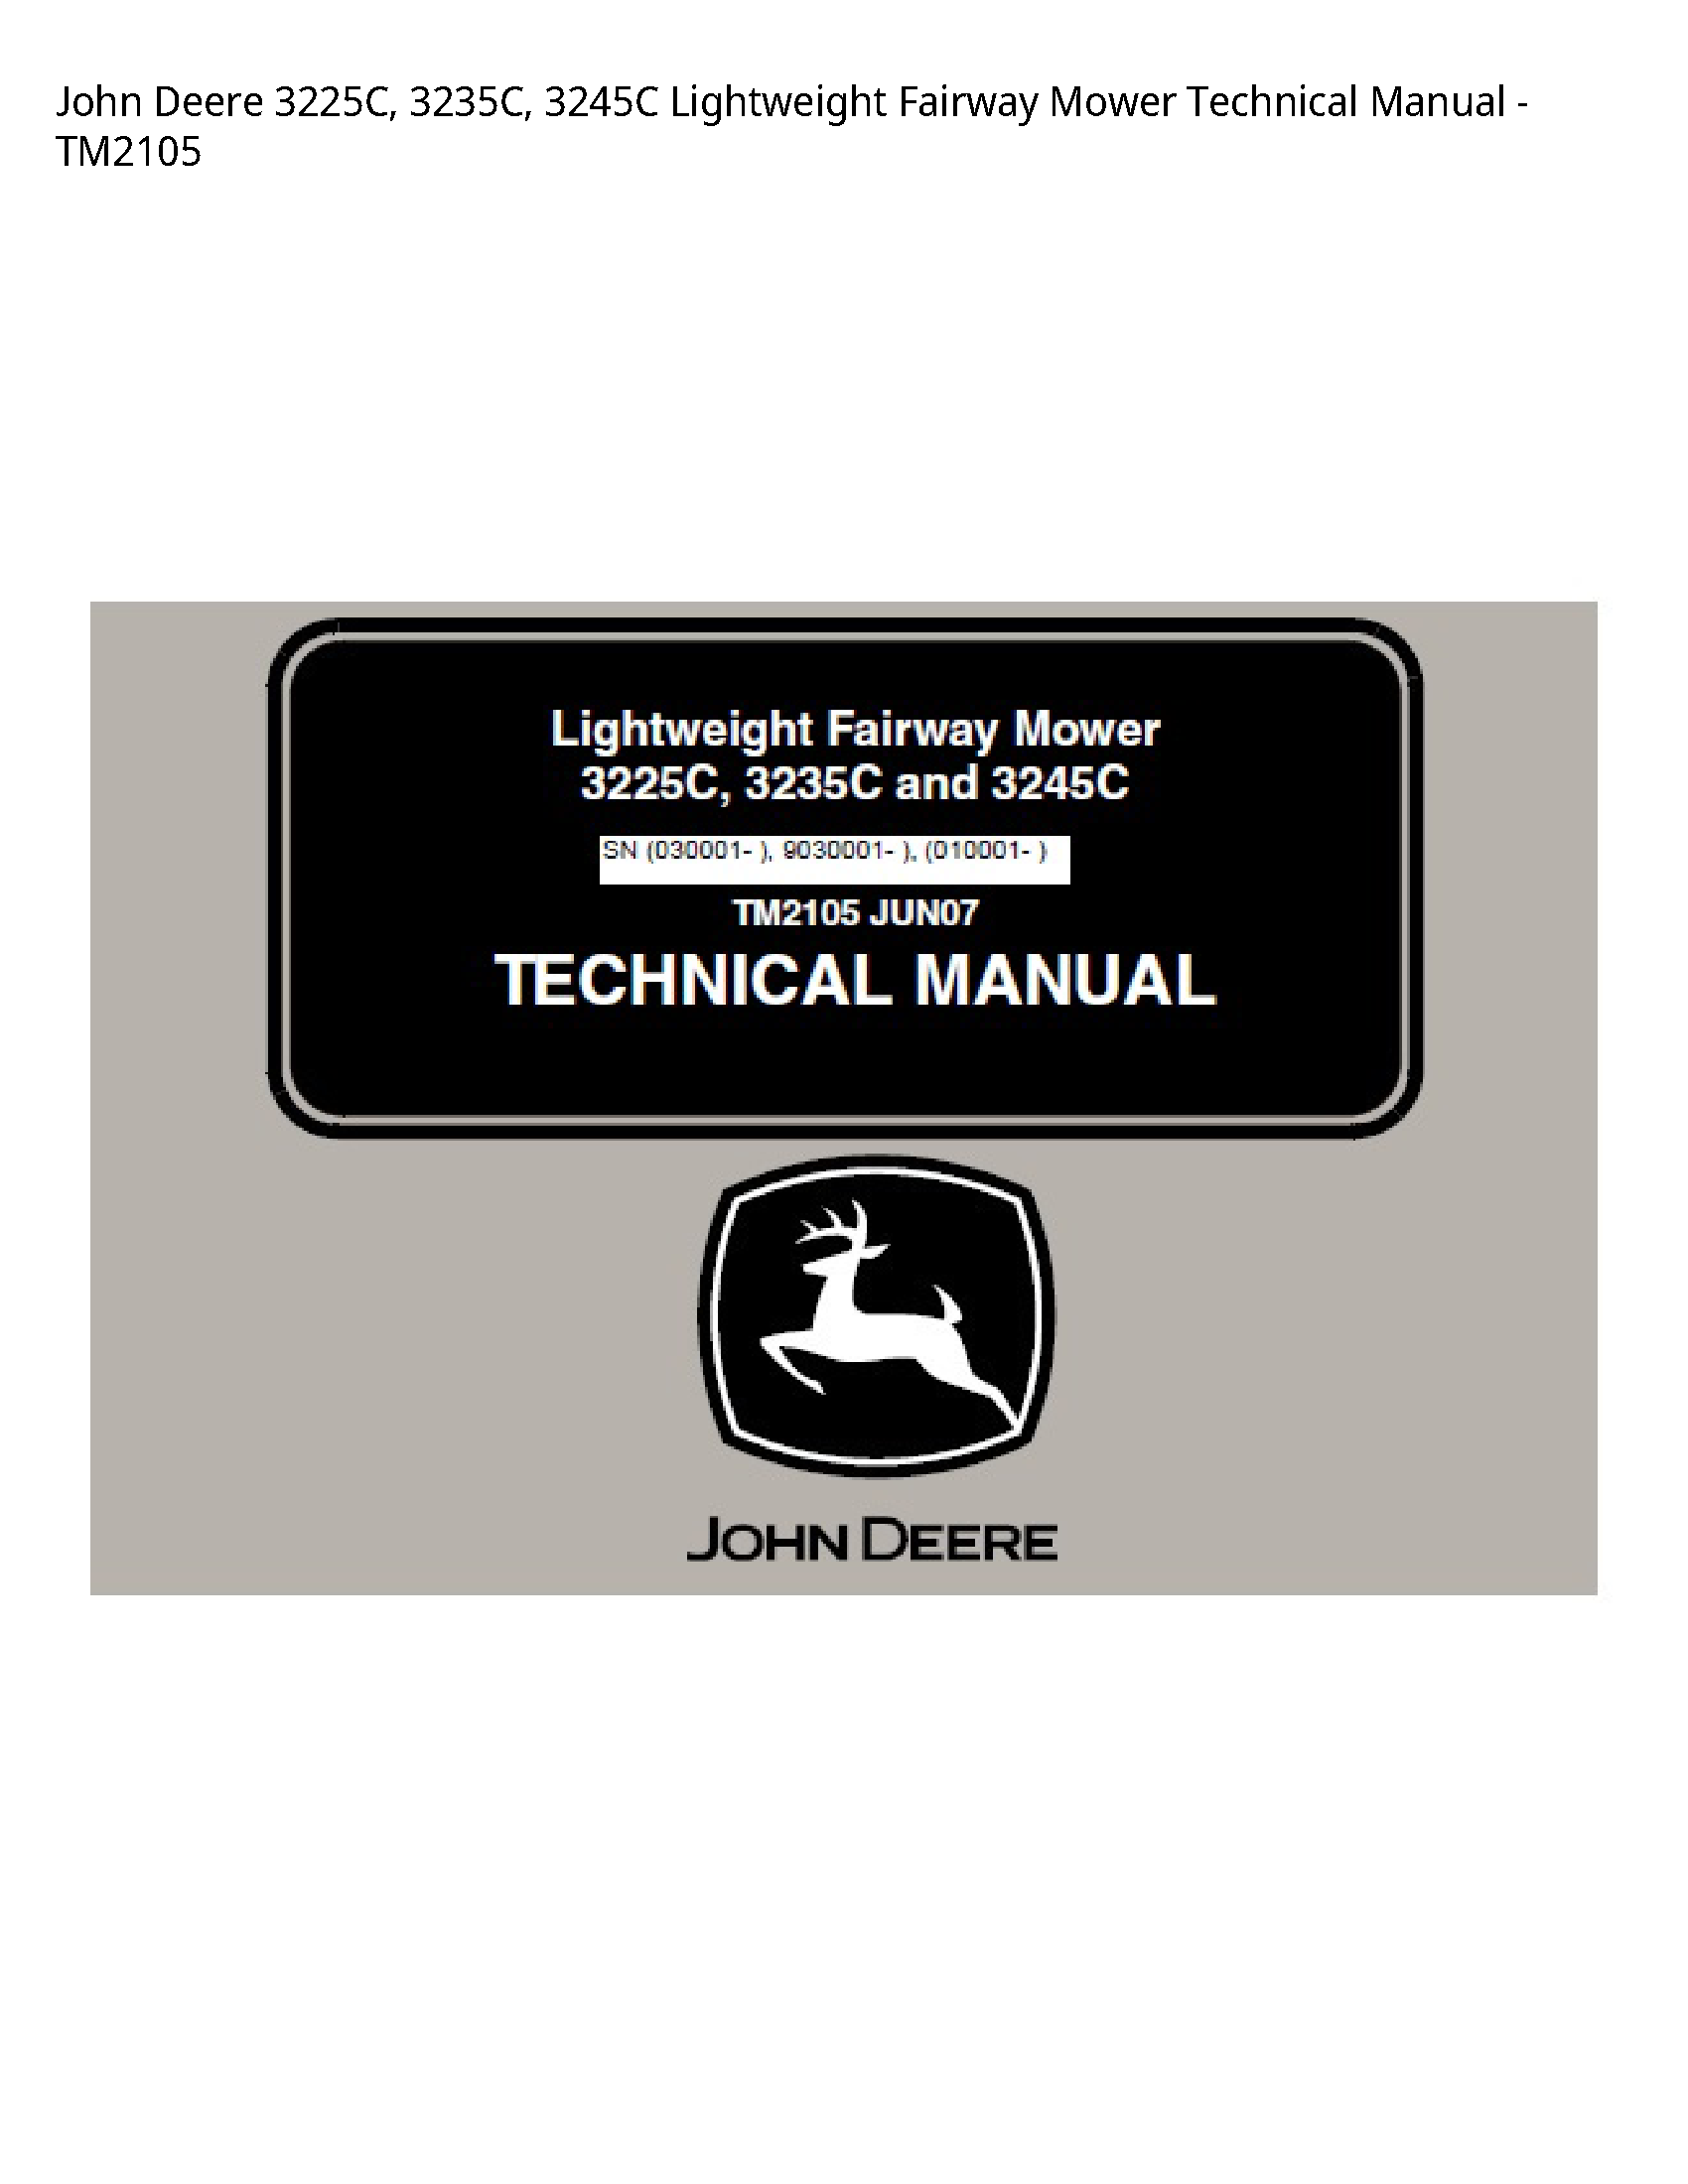 John Deere 3225C Lightweight Fairway Mower Technical manual